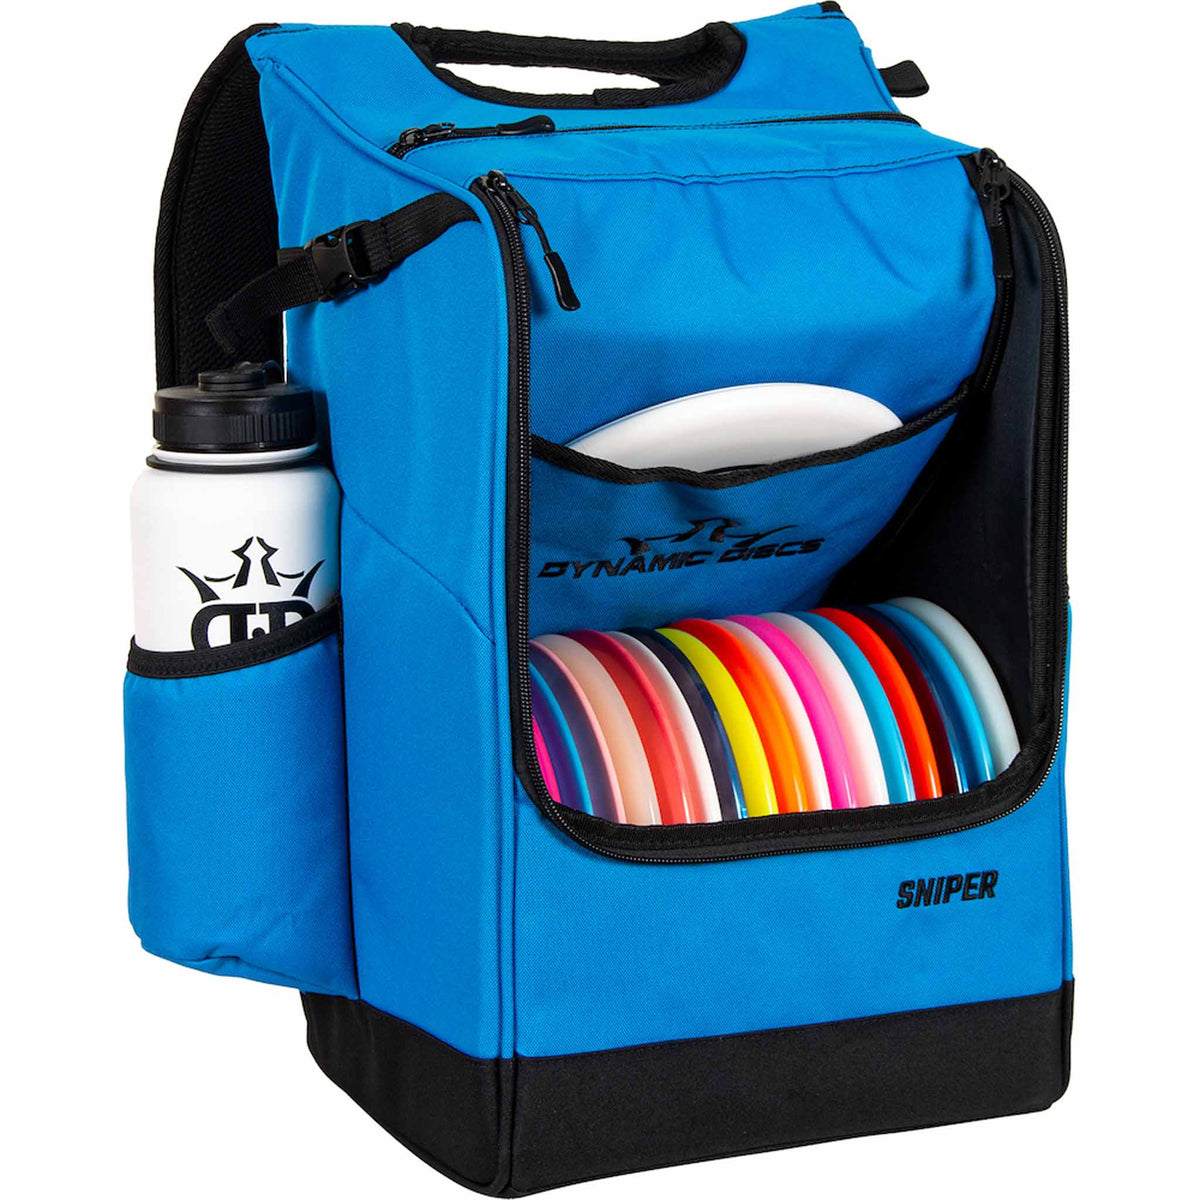 Dynamic Discs Sniper Disc Golf Backpack - Cobalt Blue - Right open